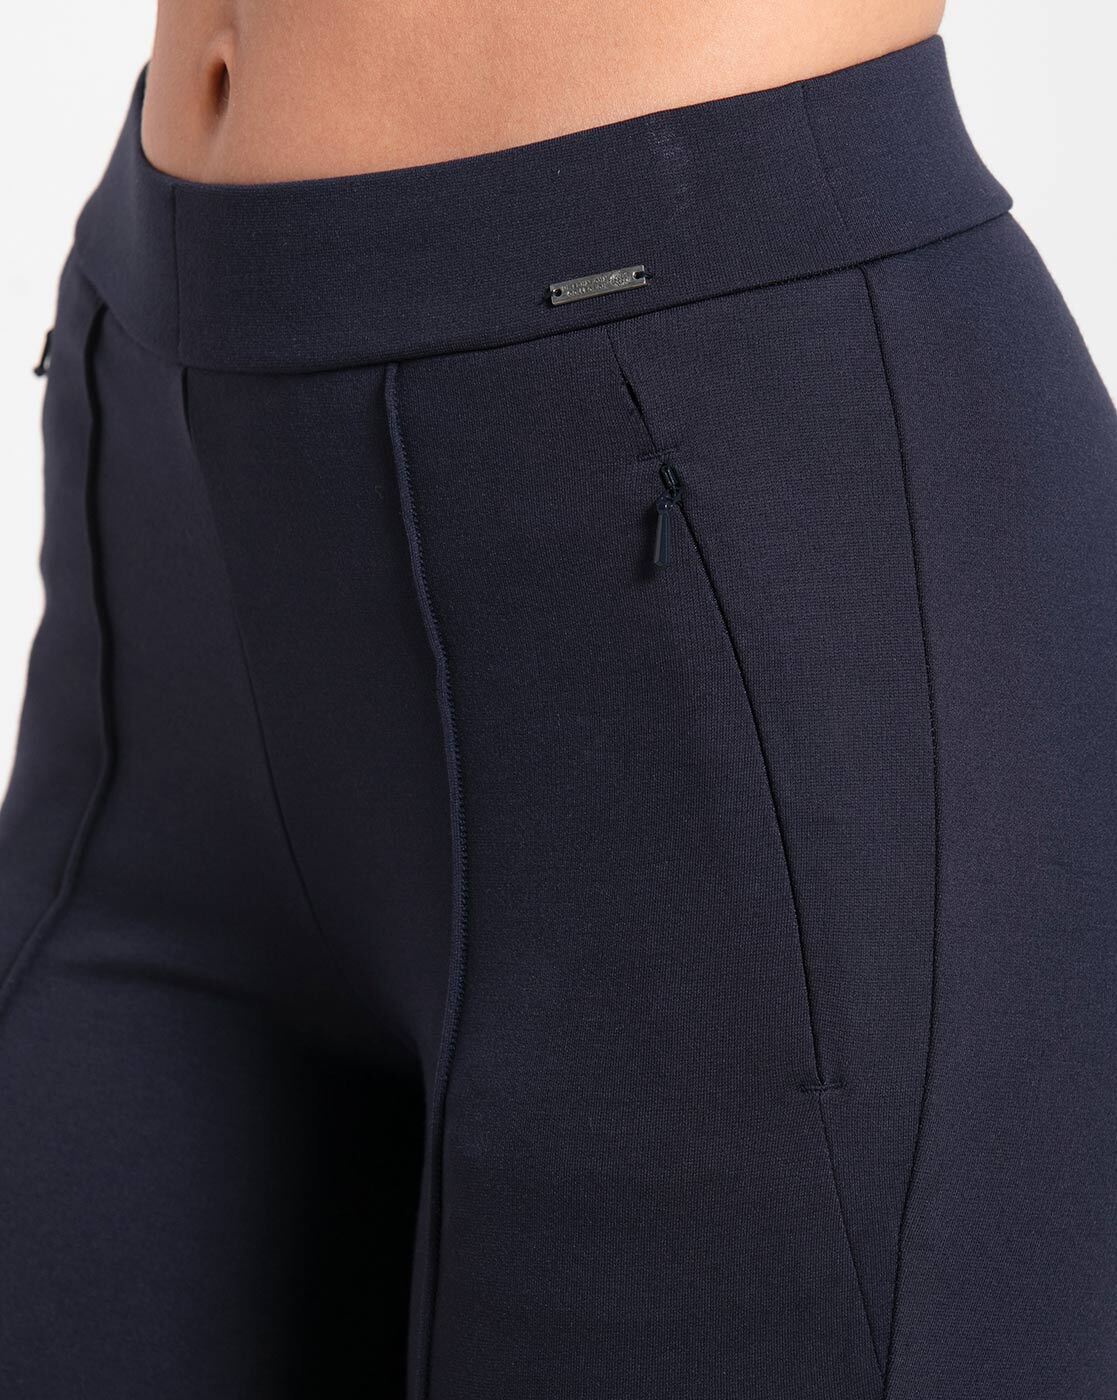 Jockey Women's Stretch Fleece Pocket Legging in Neo Navy, Size M - NWT 